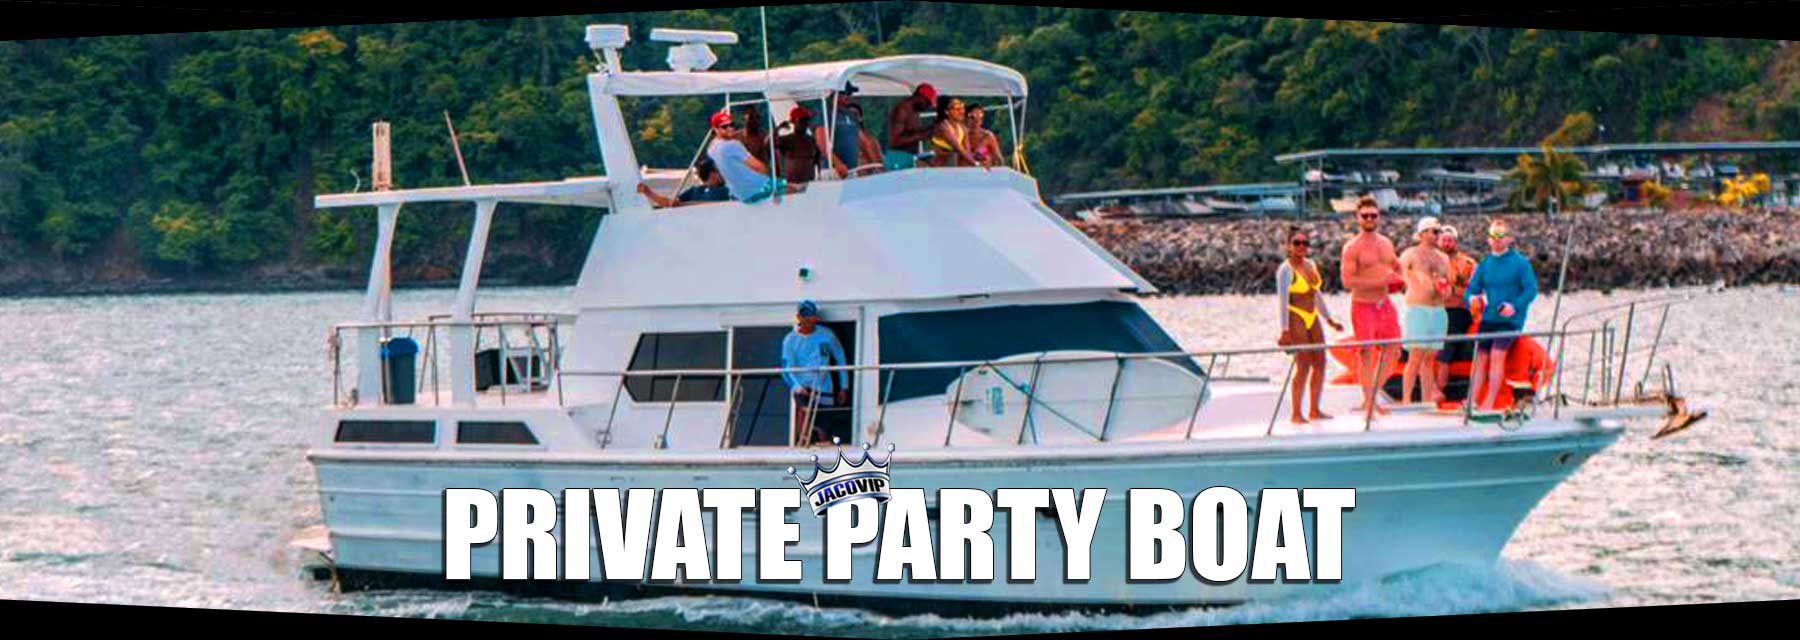 Bachelor party boat rental